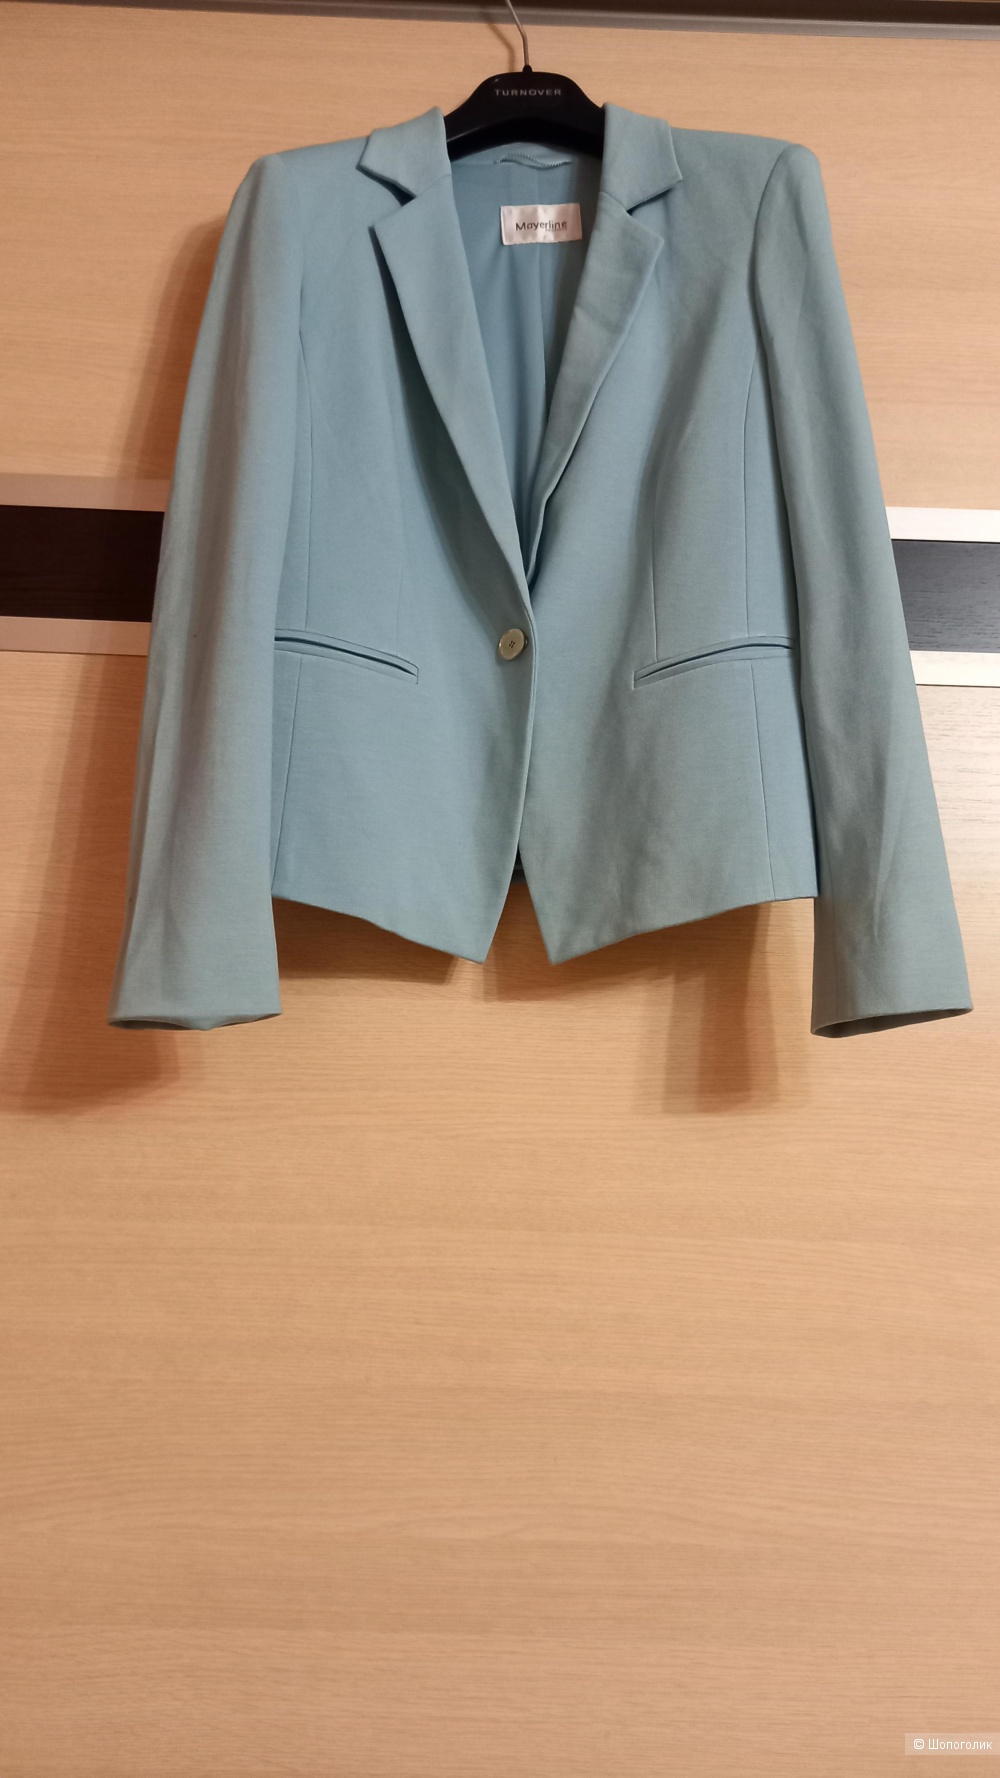 Пиджак Mayerline brussels,46 размер